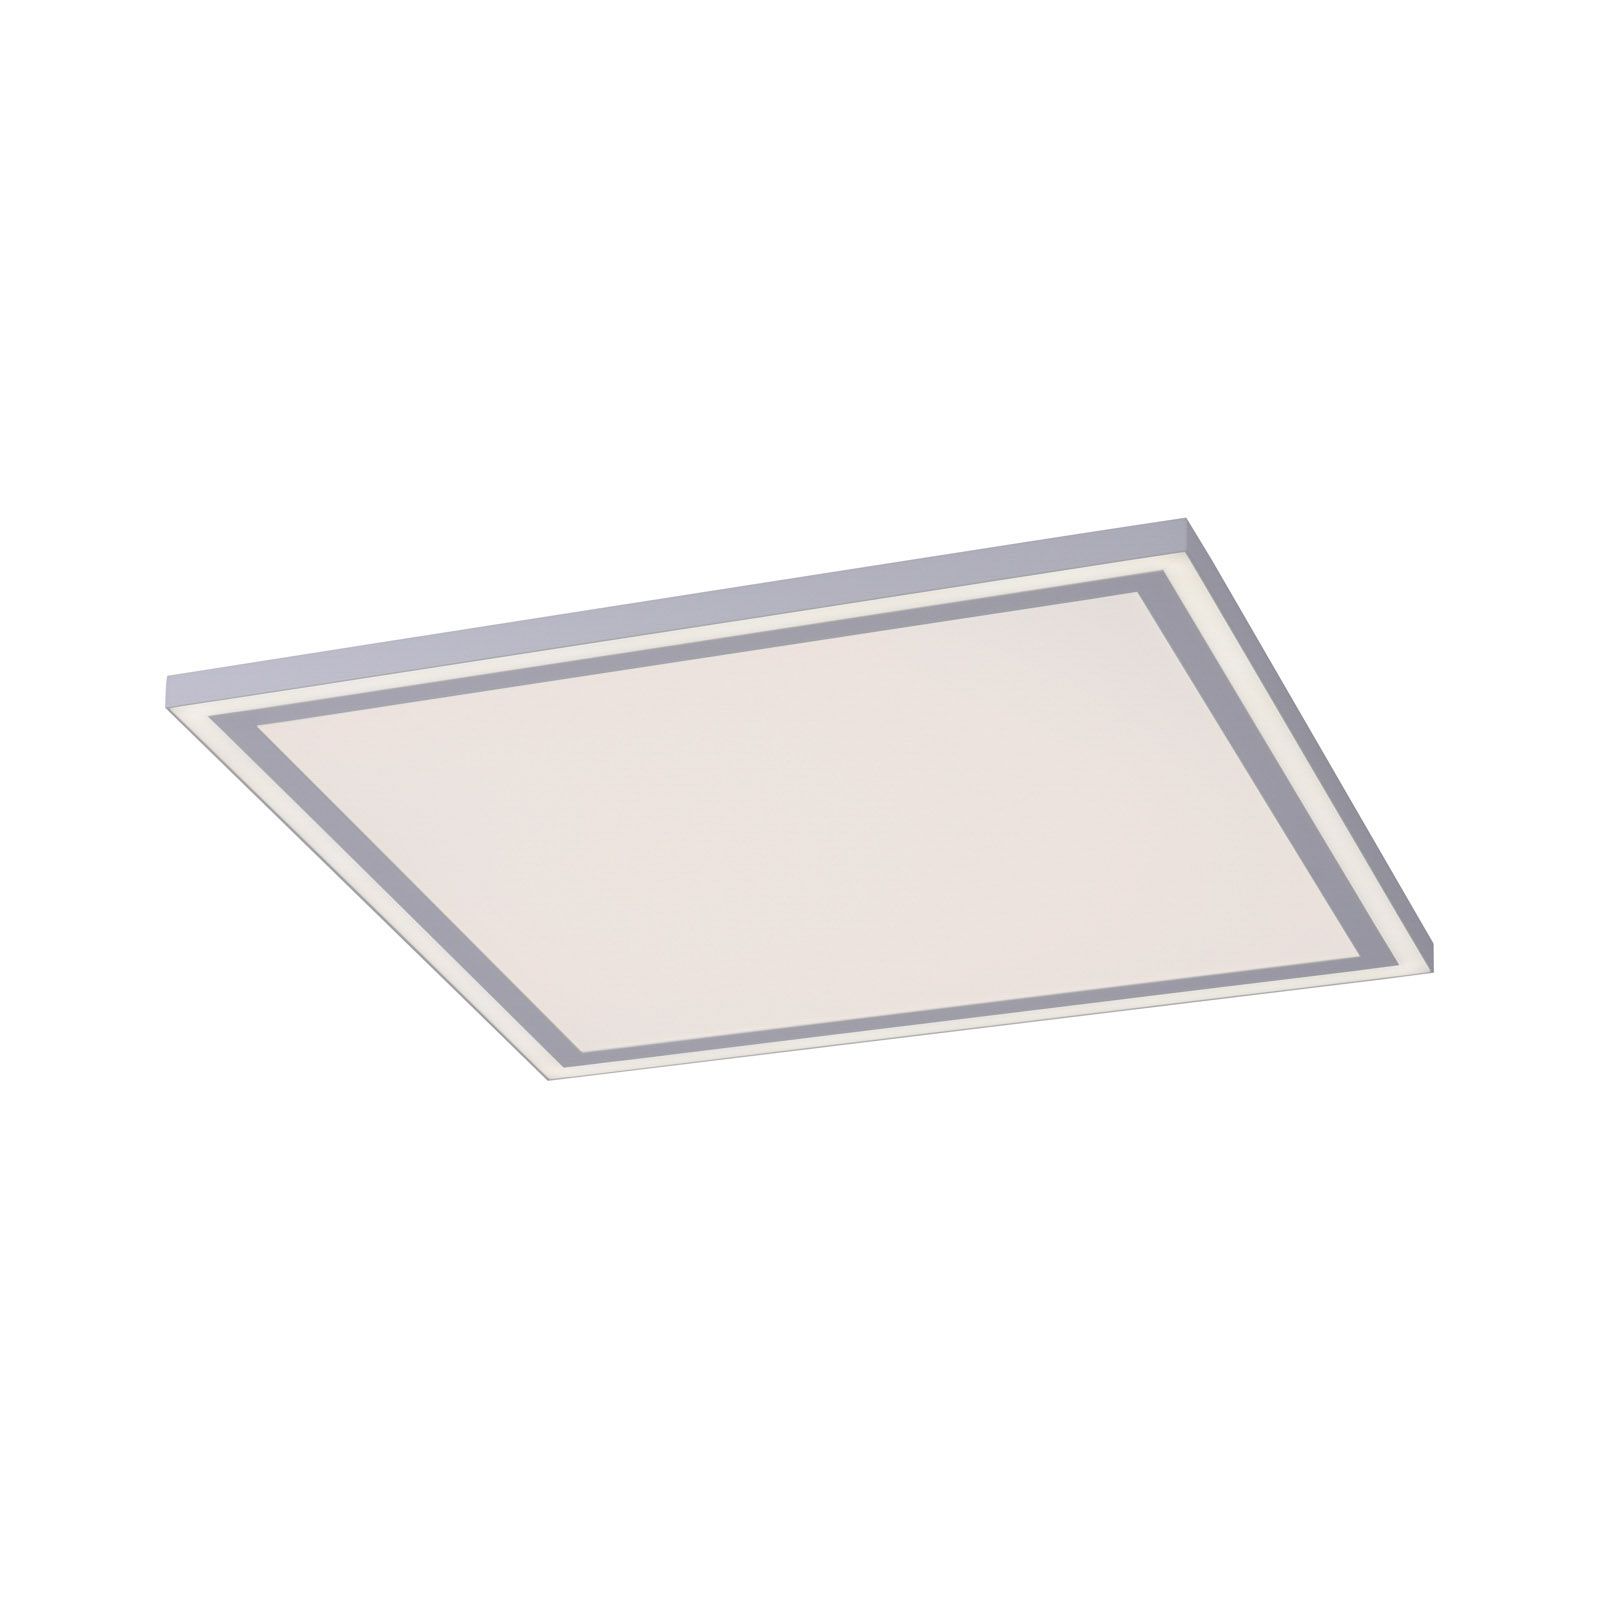 Edging LED ceiling light, tunable white, 46x46 cm